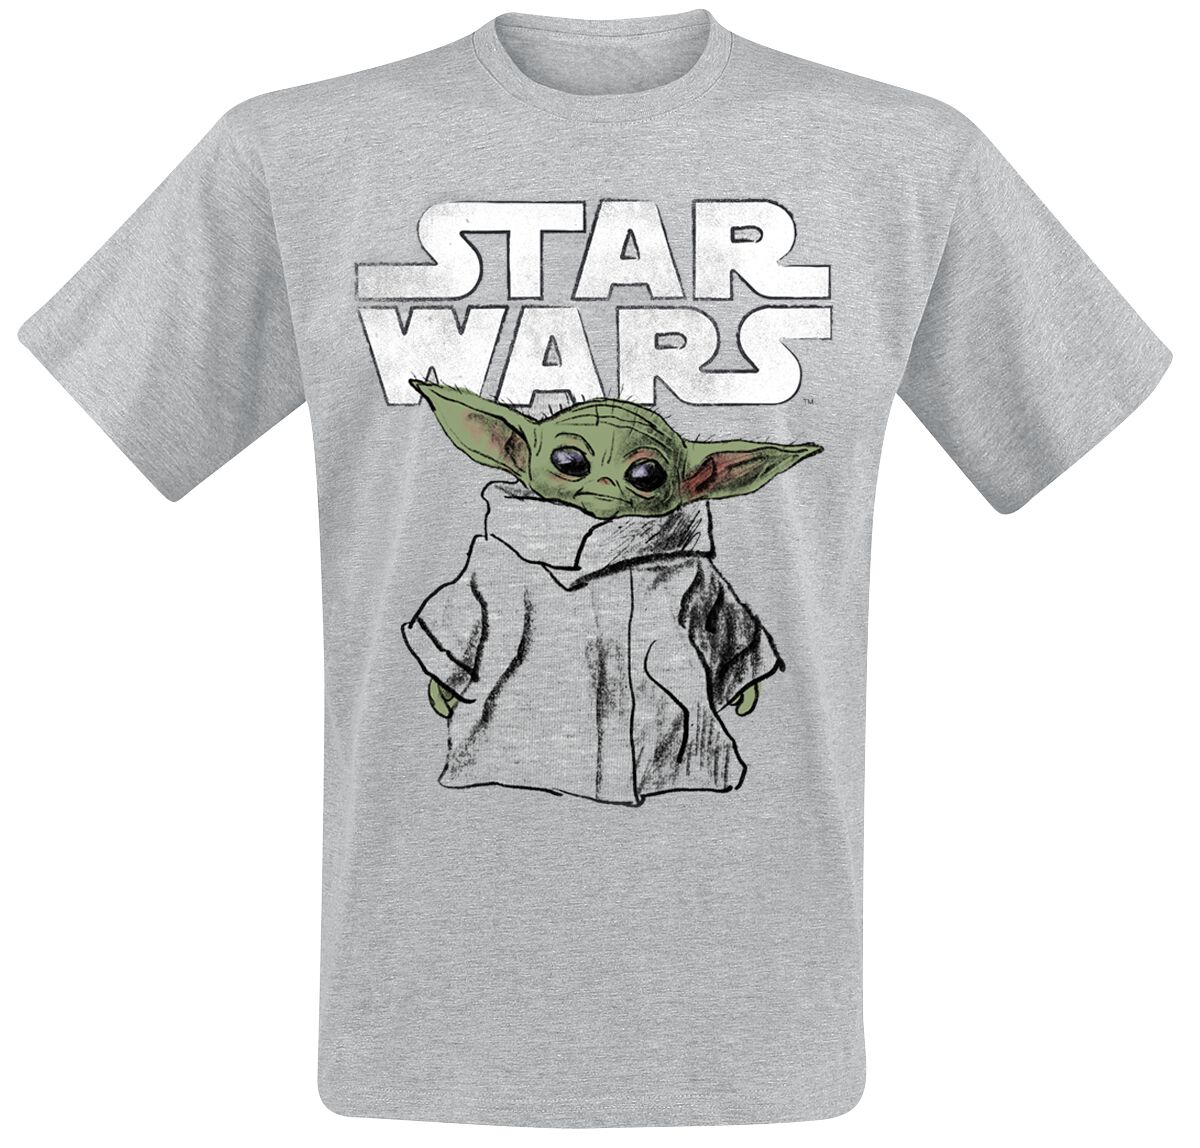 Star Wars The Mandalorian - Grogu - Sketch T-Shirt grau meliert in S